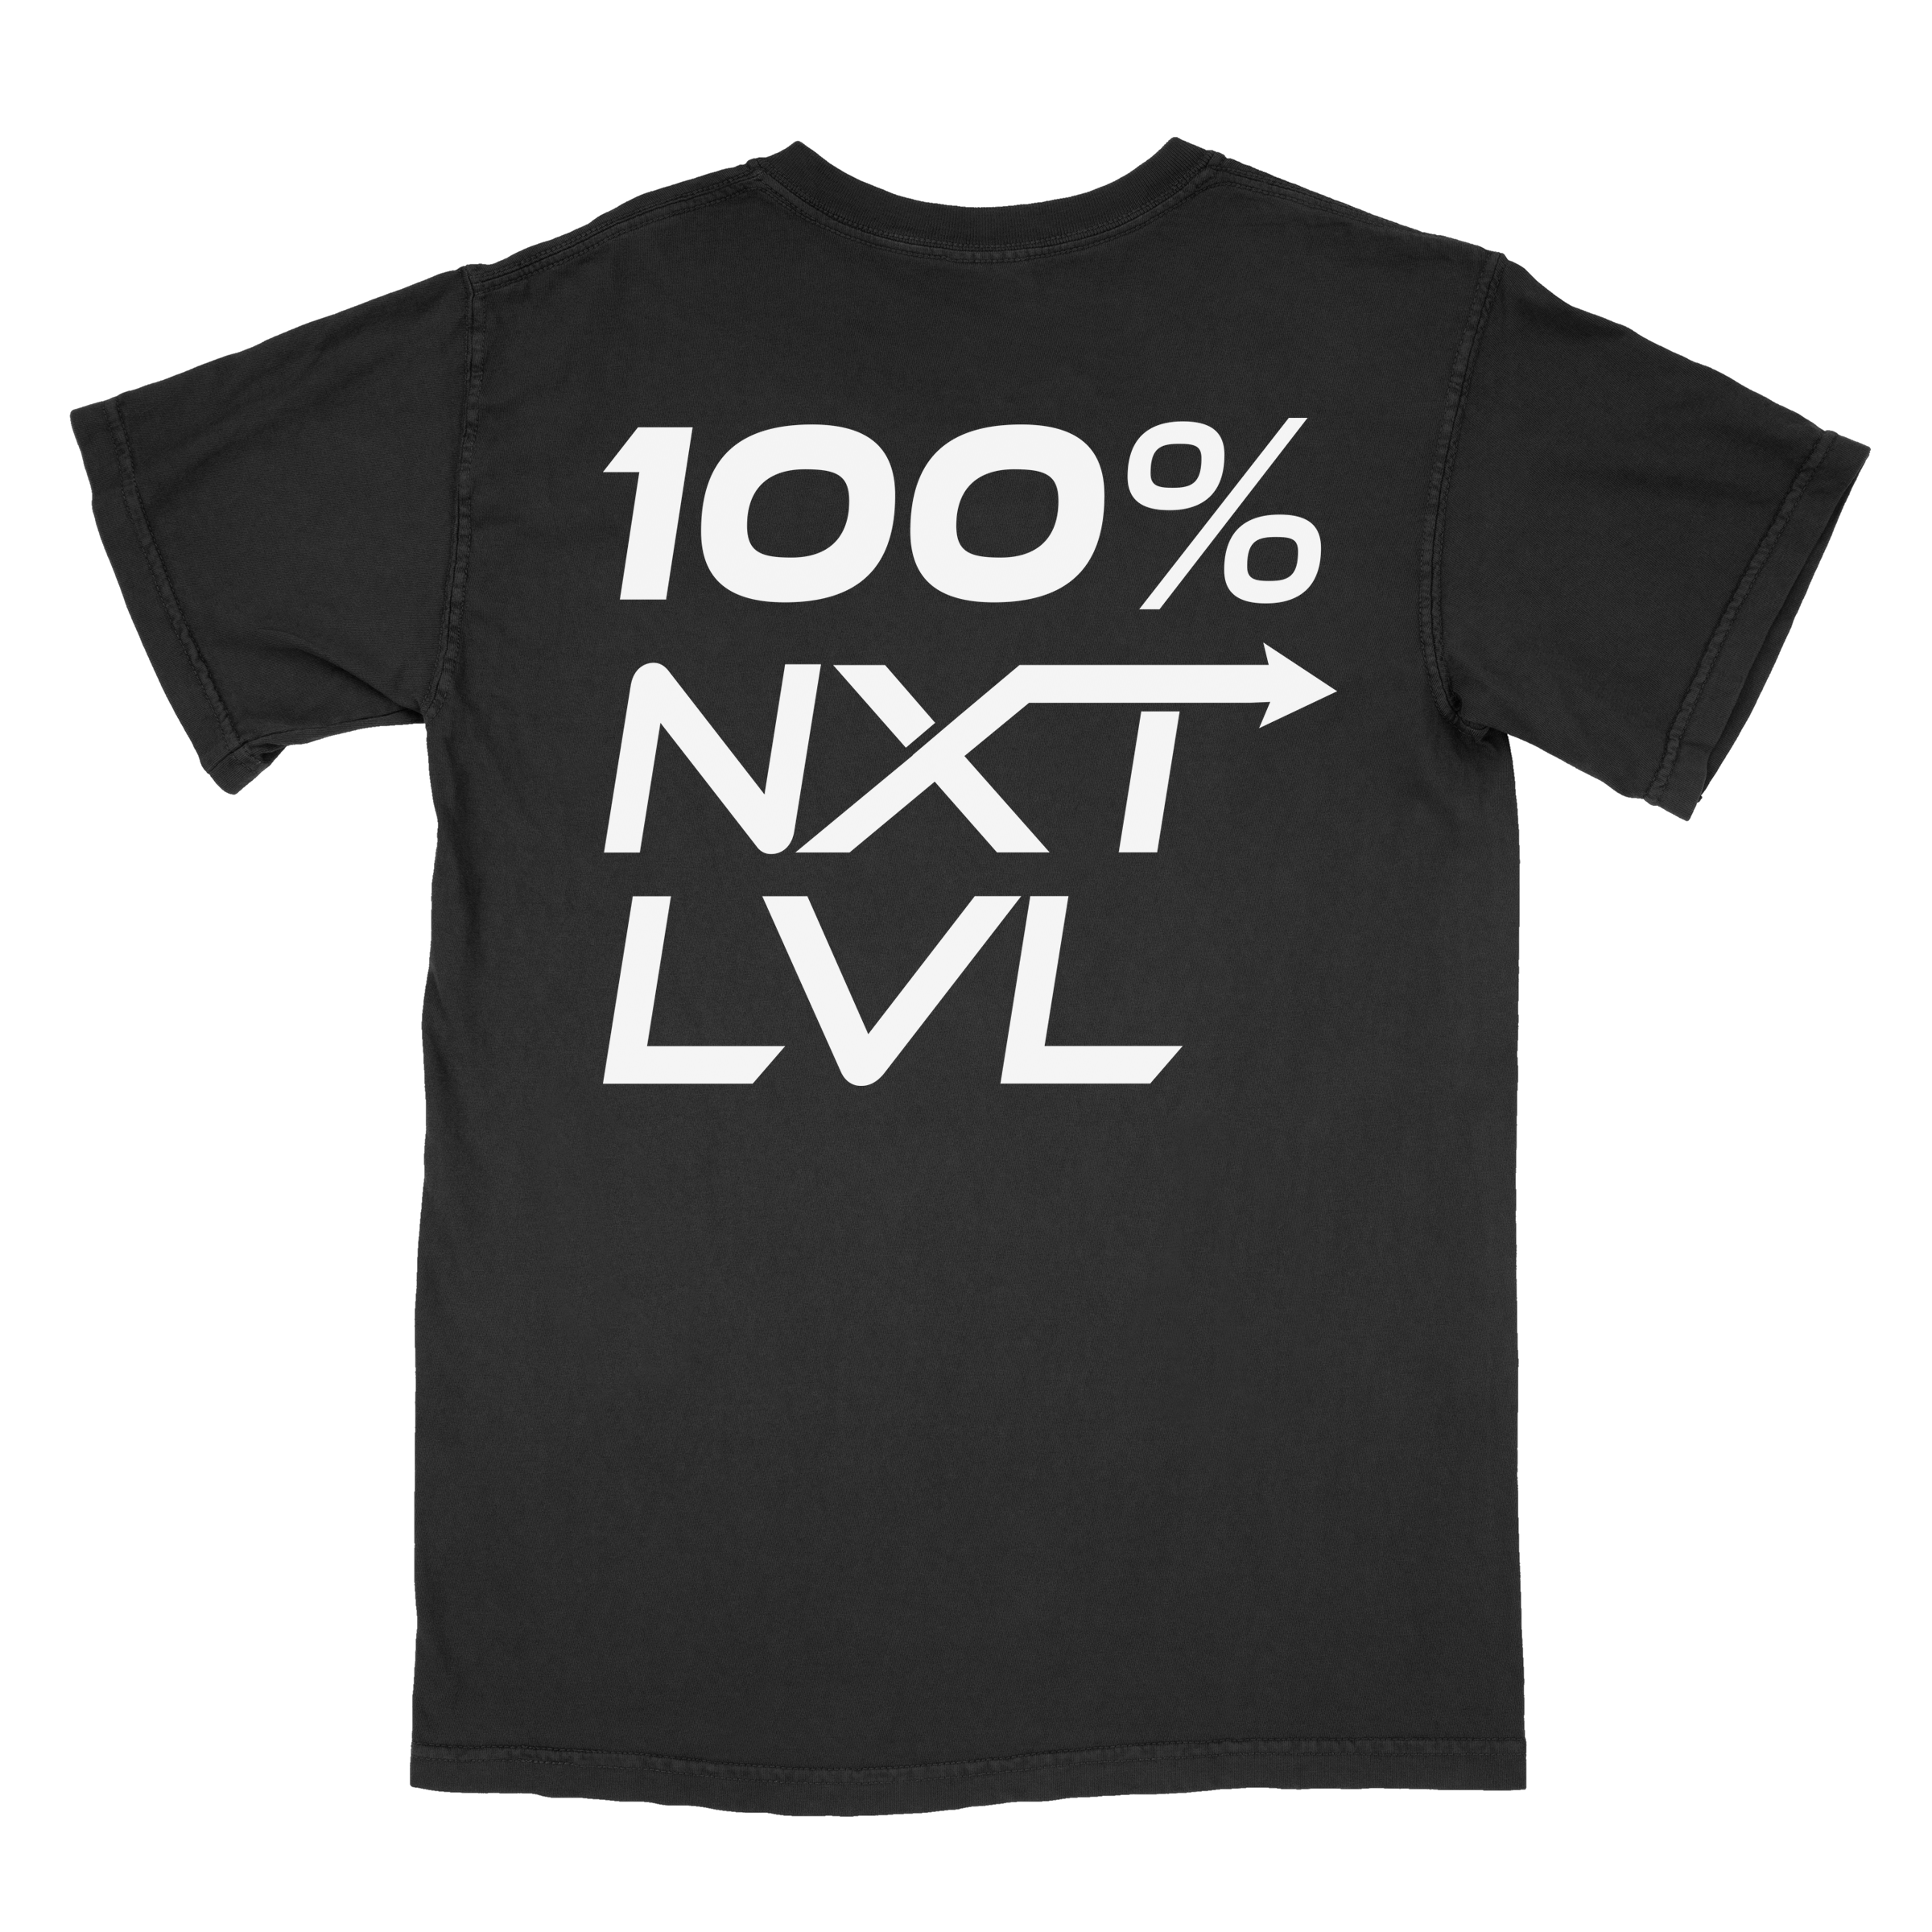 100% NXT LVL Tee - Black